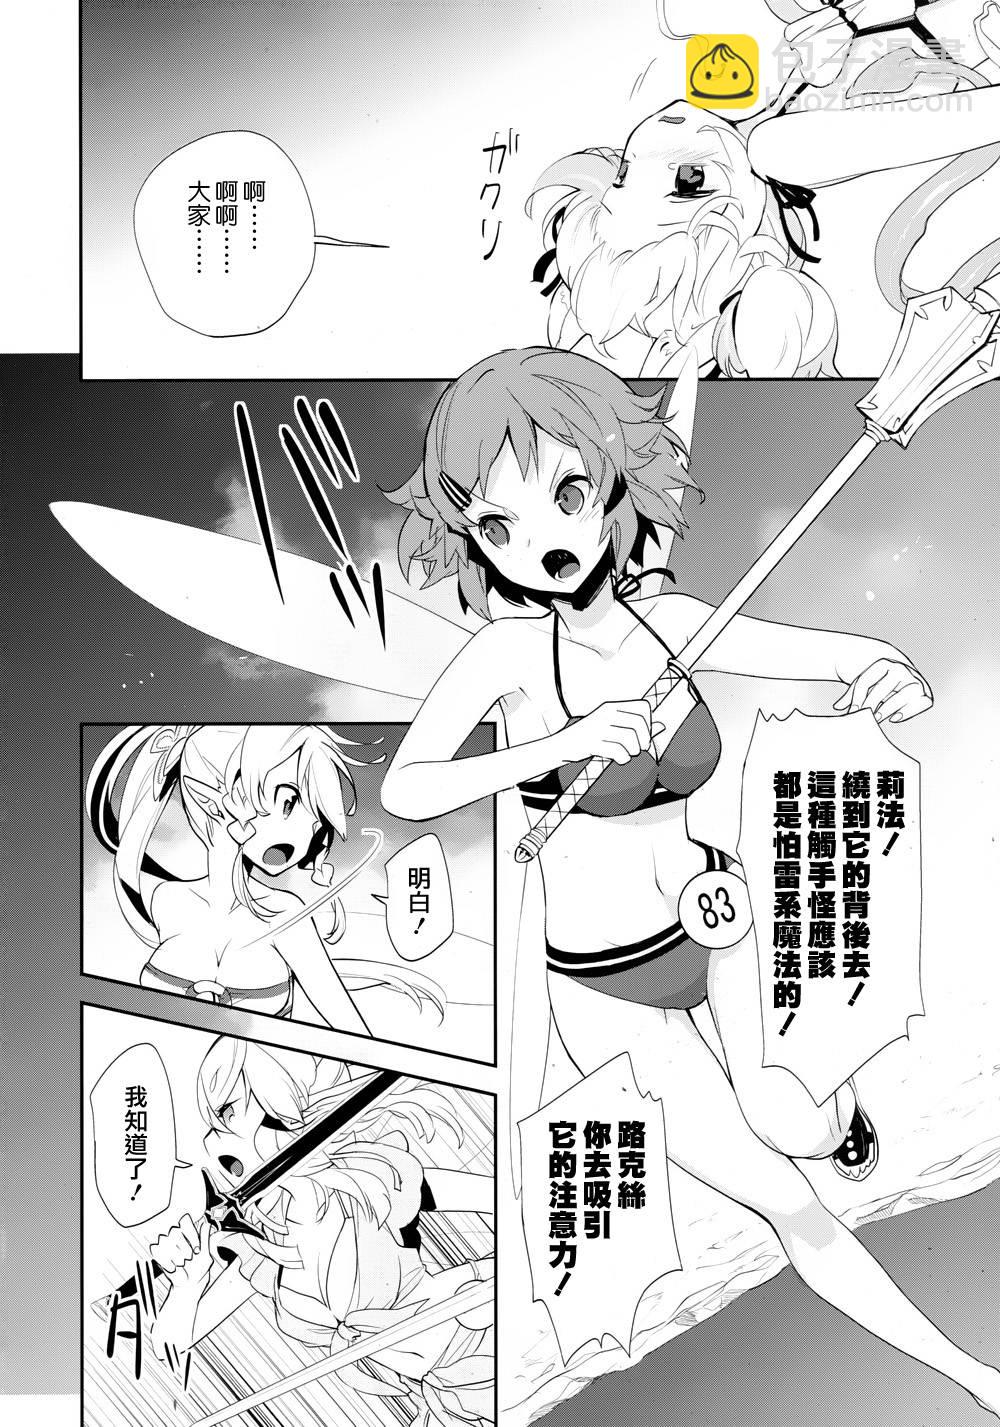 Sword Art Online少女們的樂章 - 第09話 - 6